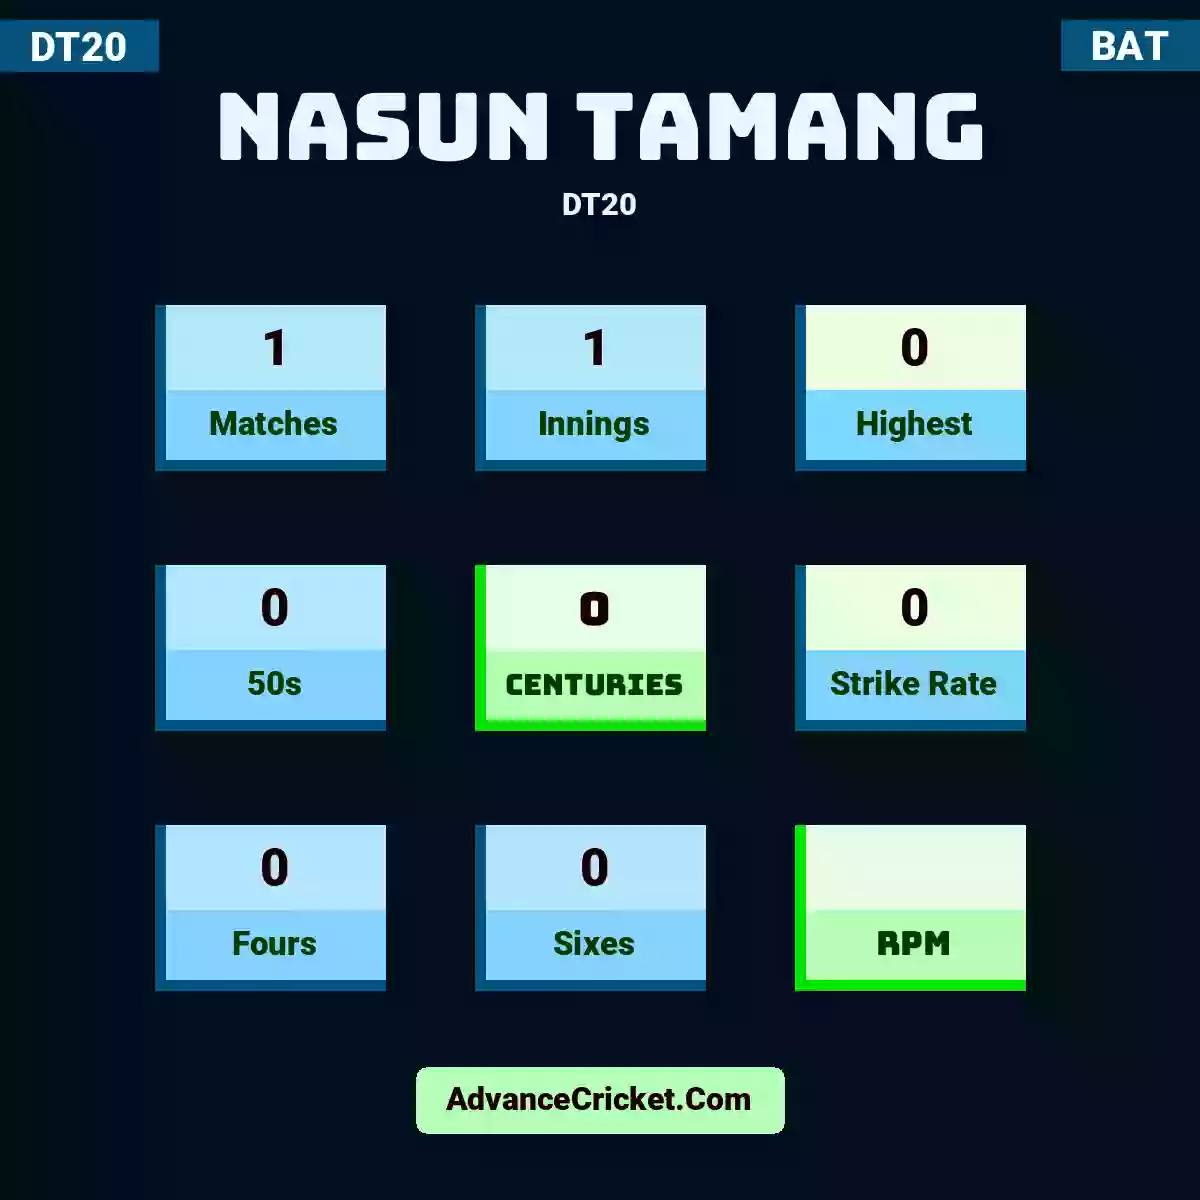 Nasun Tamang DT20 , Nasun Tamang played 1 matches, scored 0 runs as highest, 0 half-centuries, and 0 centuries, with a strike rate of 0. N.Tamang hit 0 fours and 0 sixes.